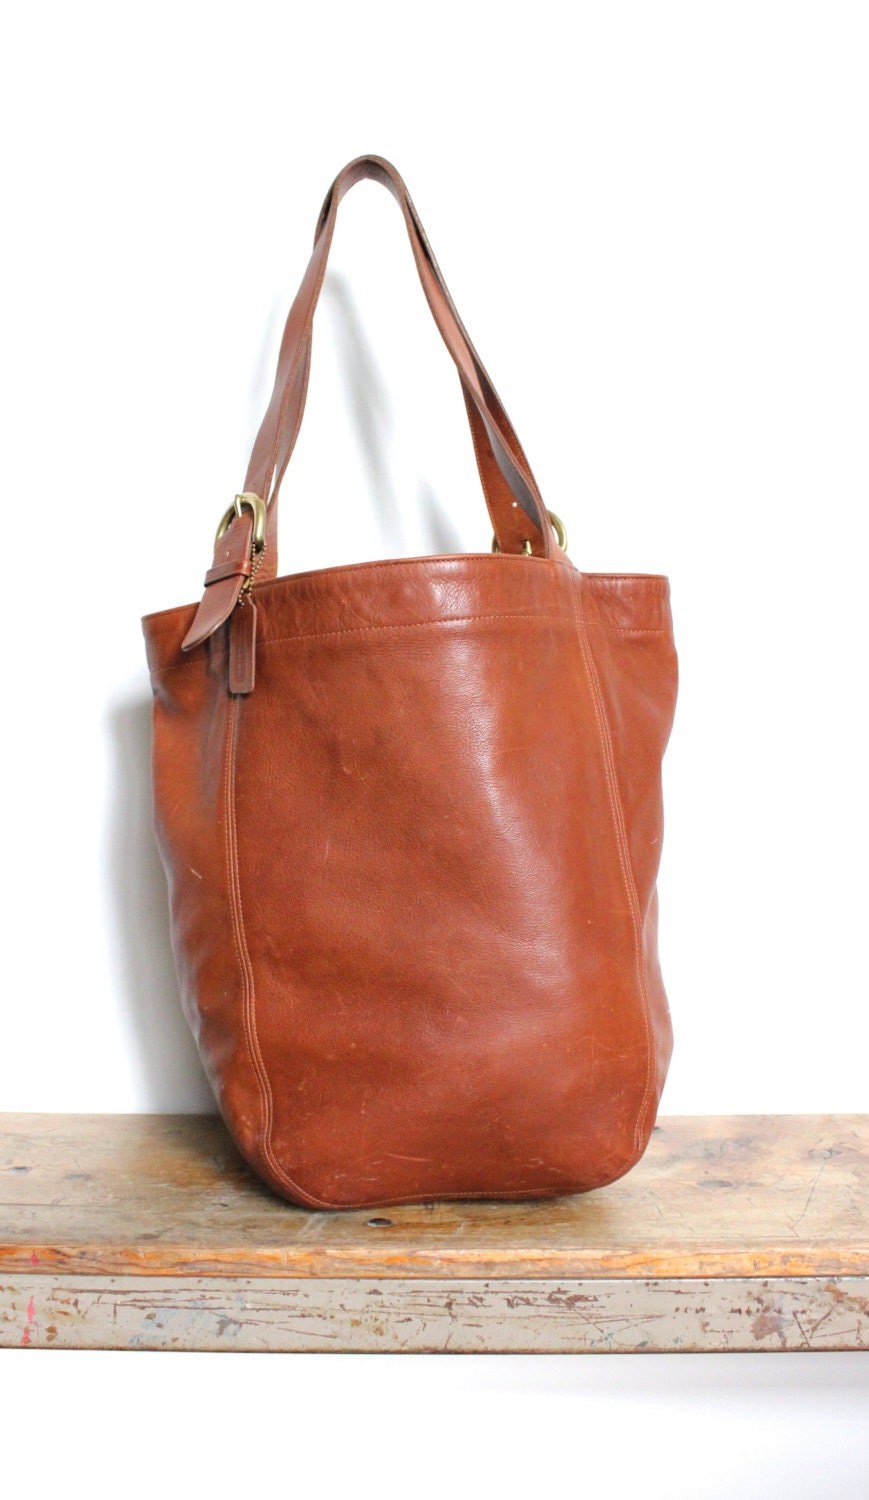 Vintage Coach Bag // Coach Soho Tote Bag by magnoliavintageco